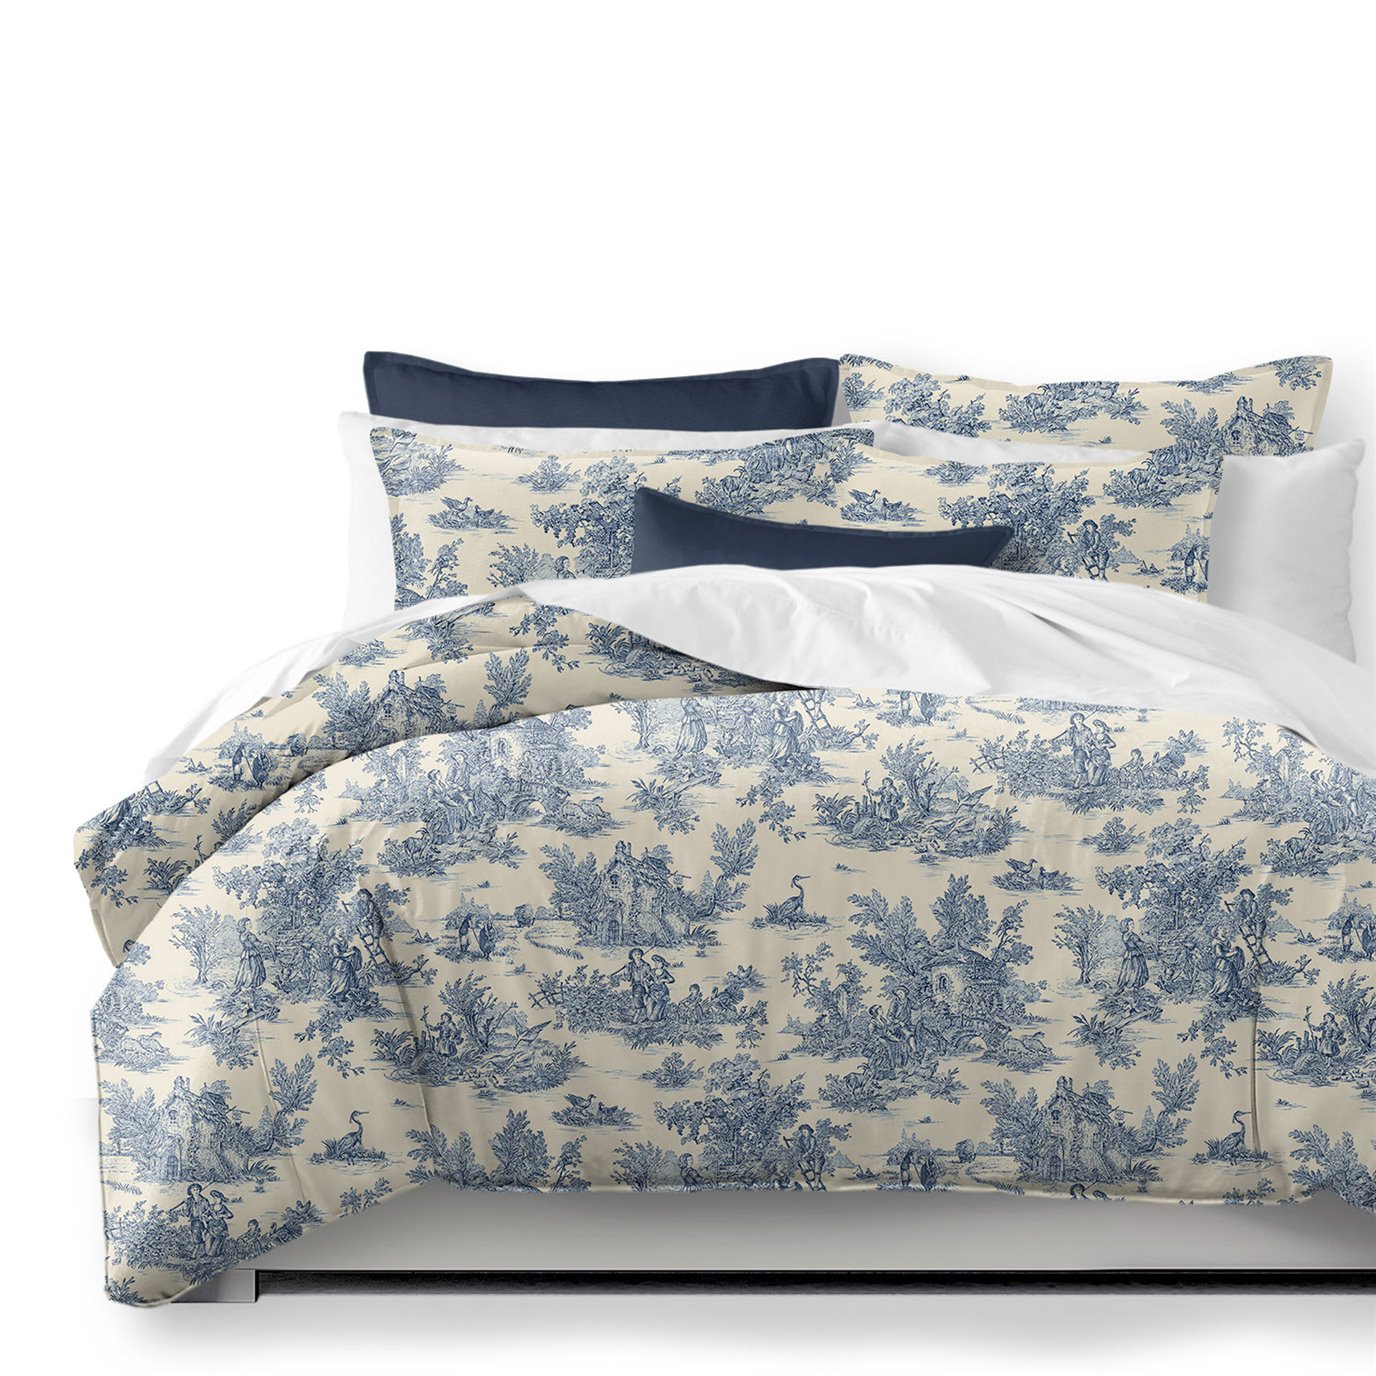 Bouclair Blue Coverlet and Pillow Sham(s) Set - Size Queen